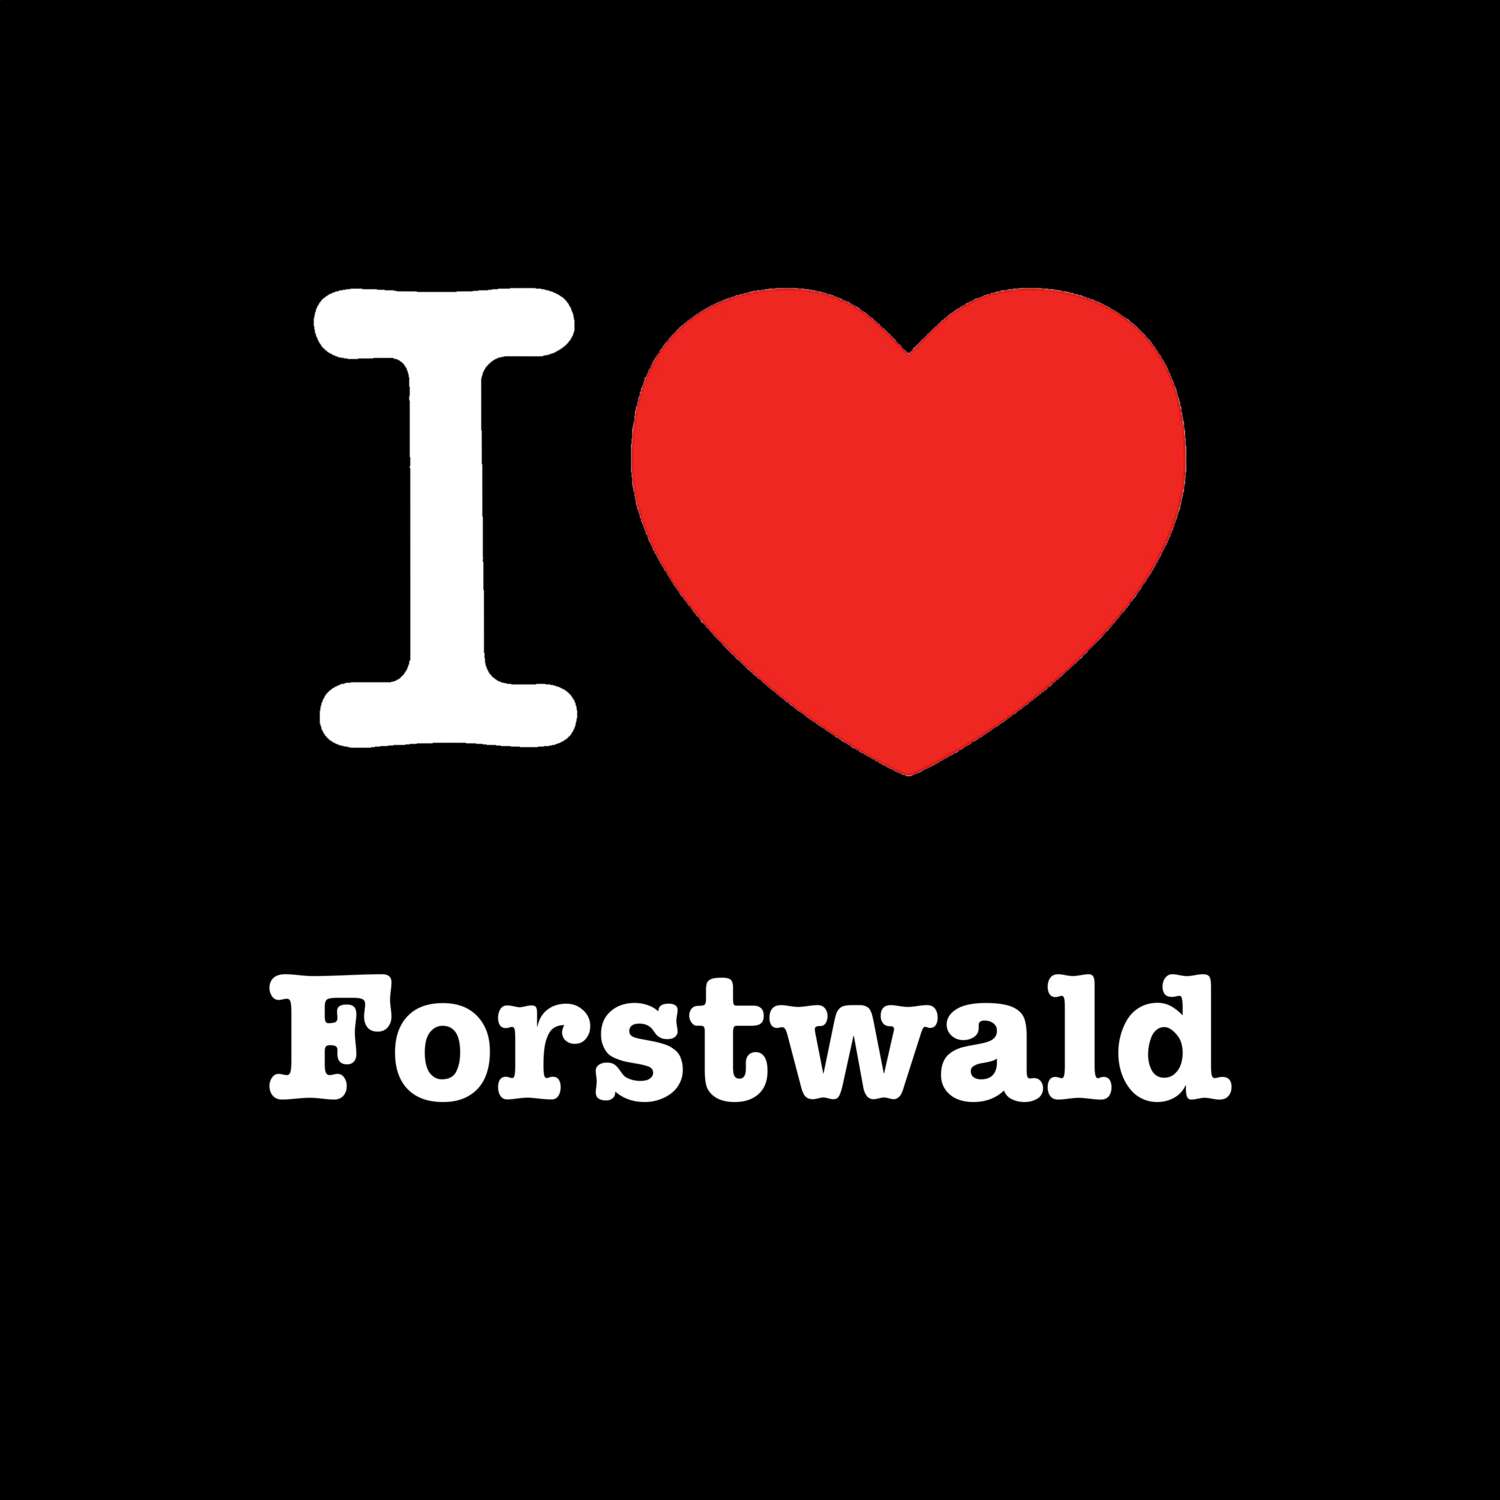 Forstwald T-Shirt »I love«